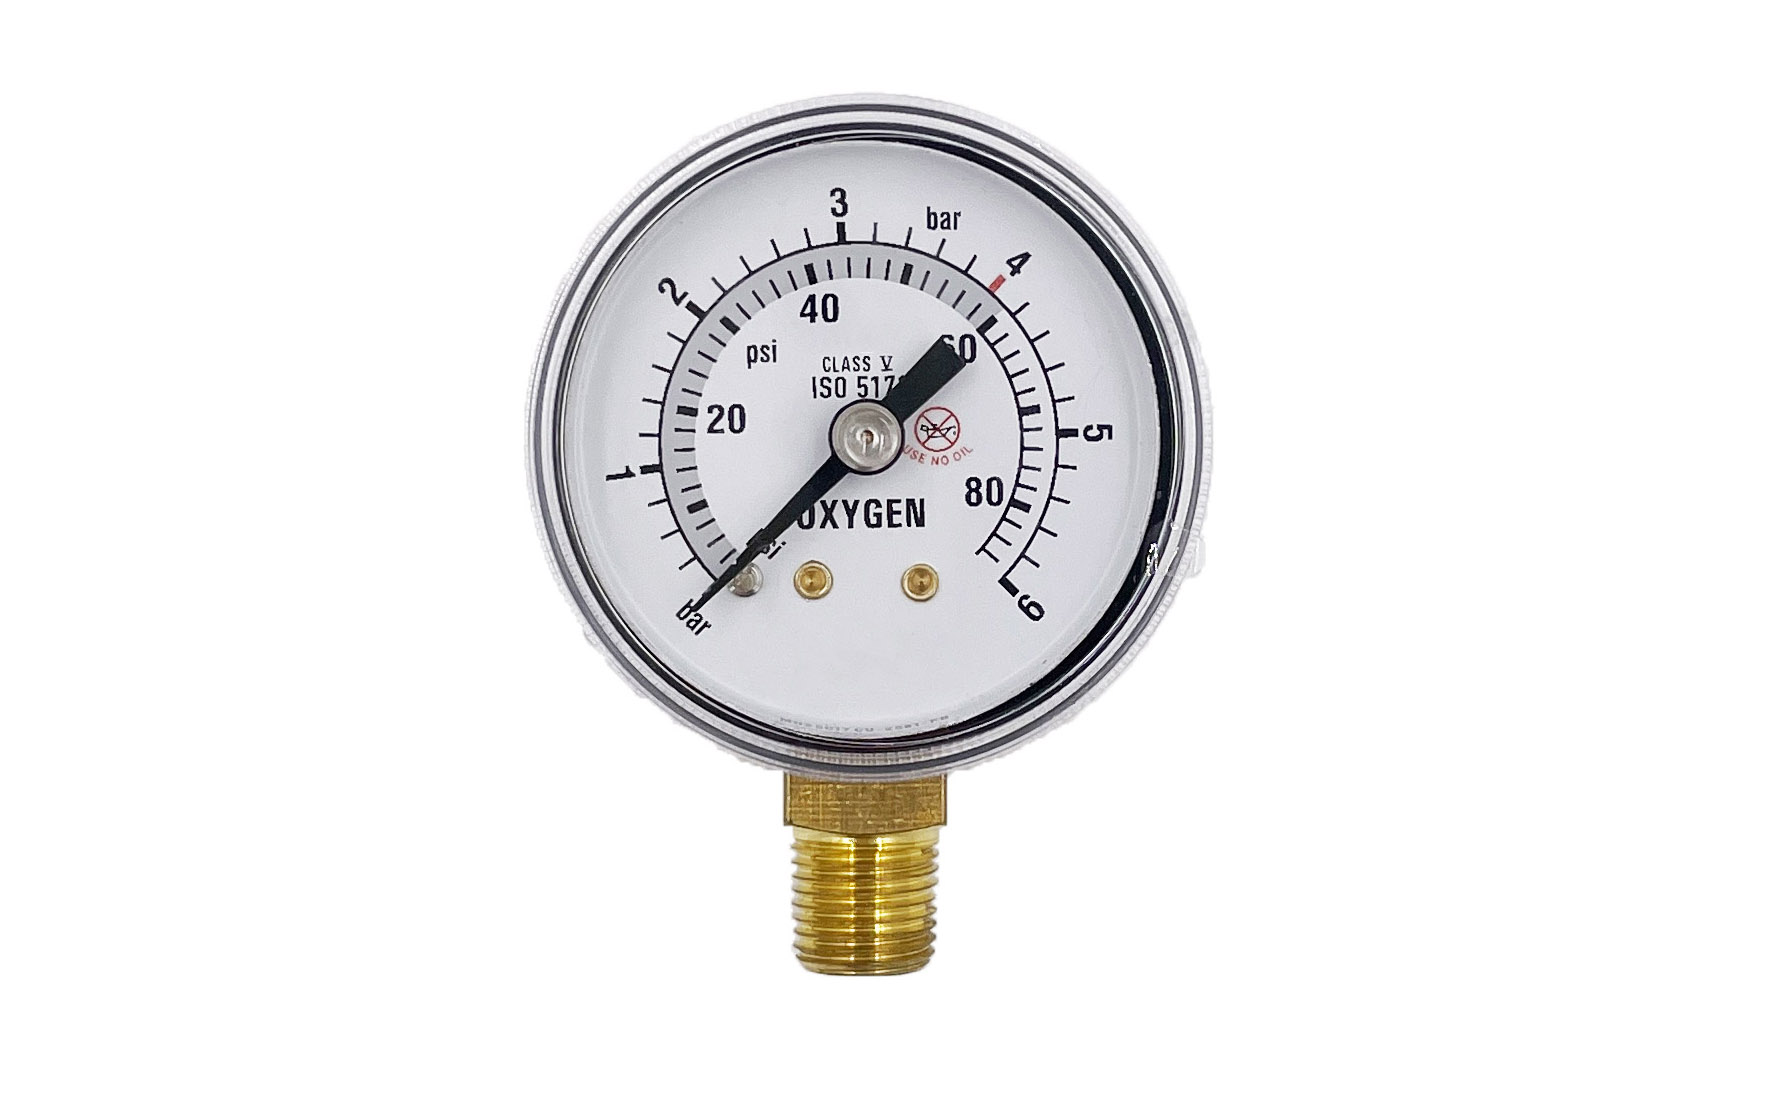 Toronto a company bought a batch of pressure gauges